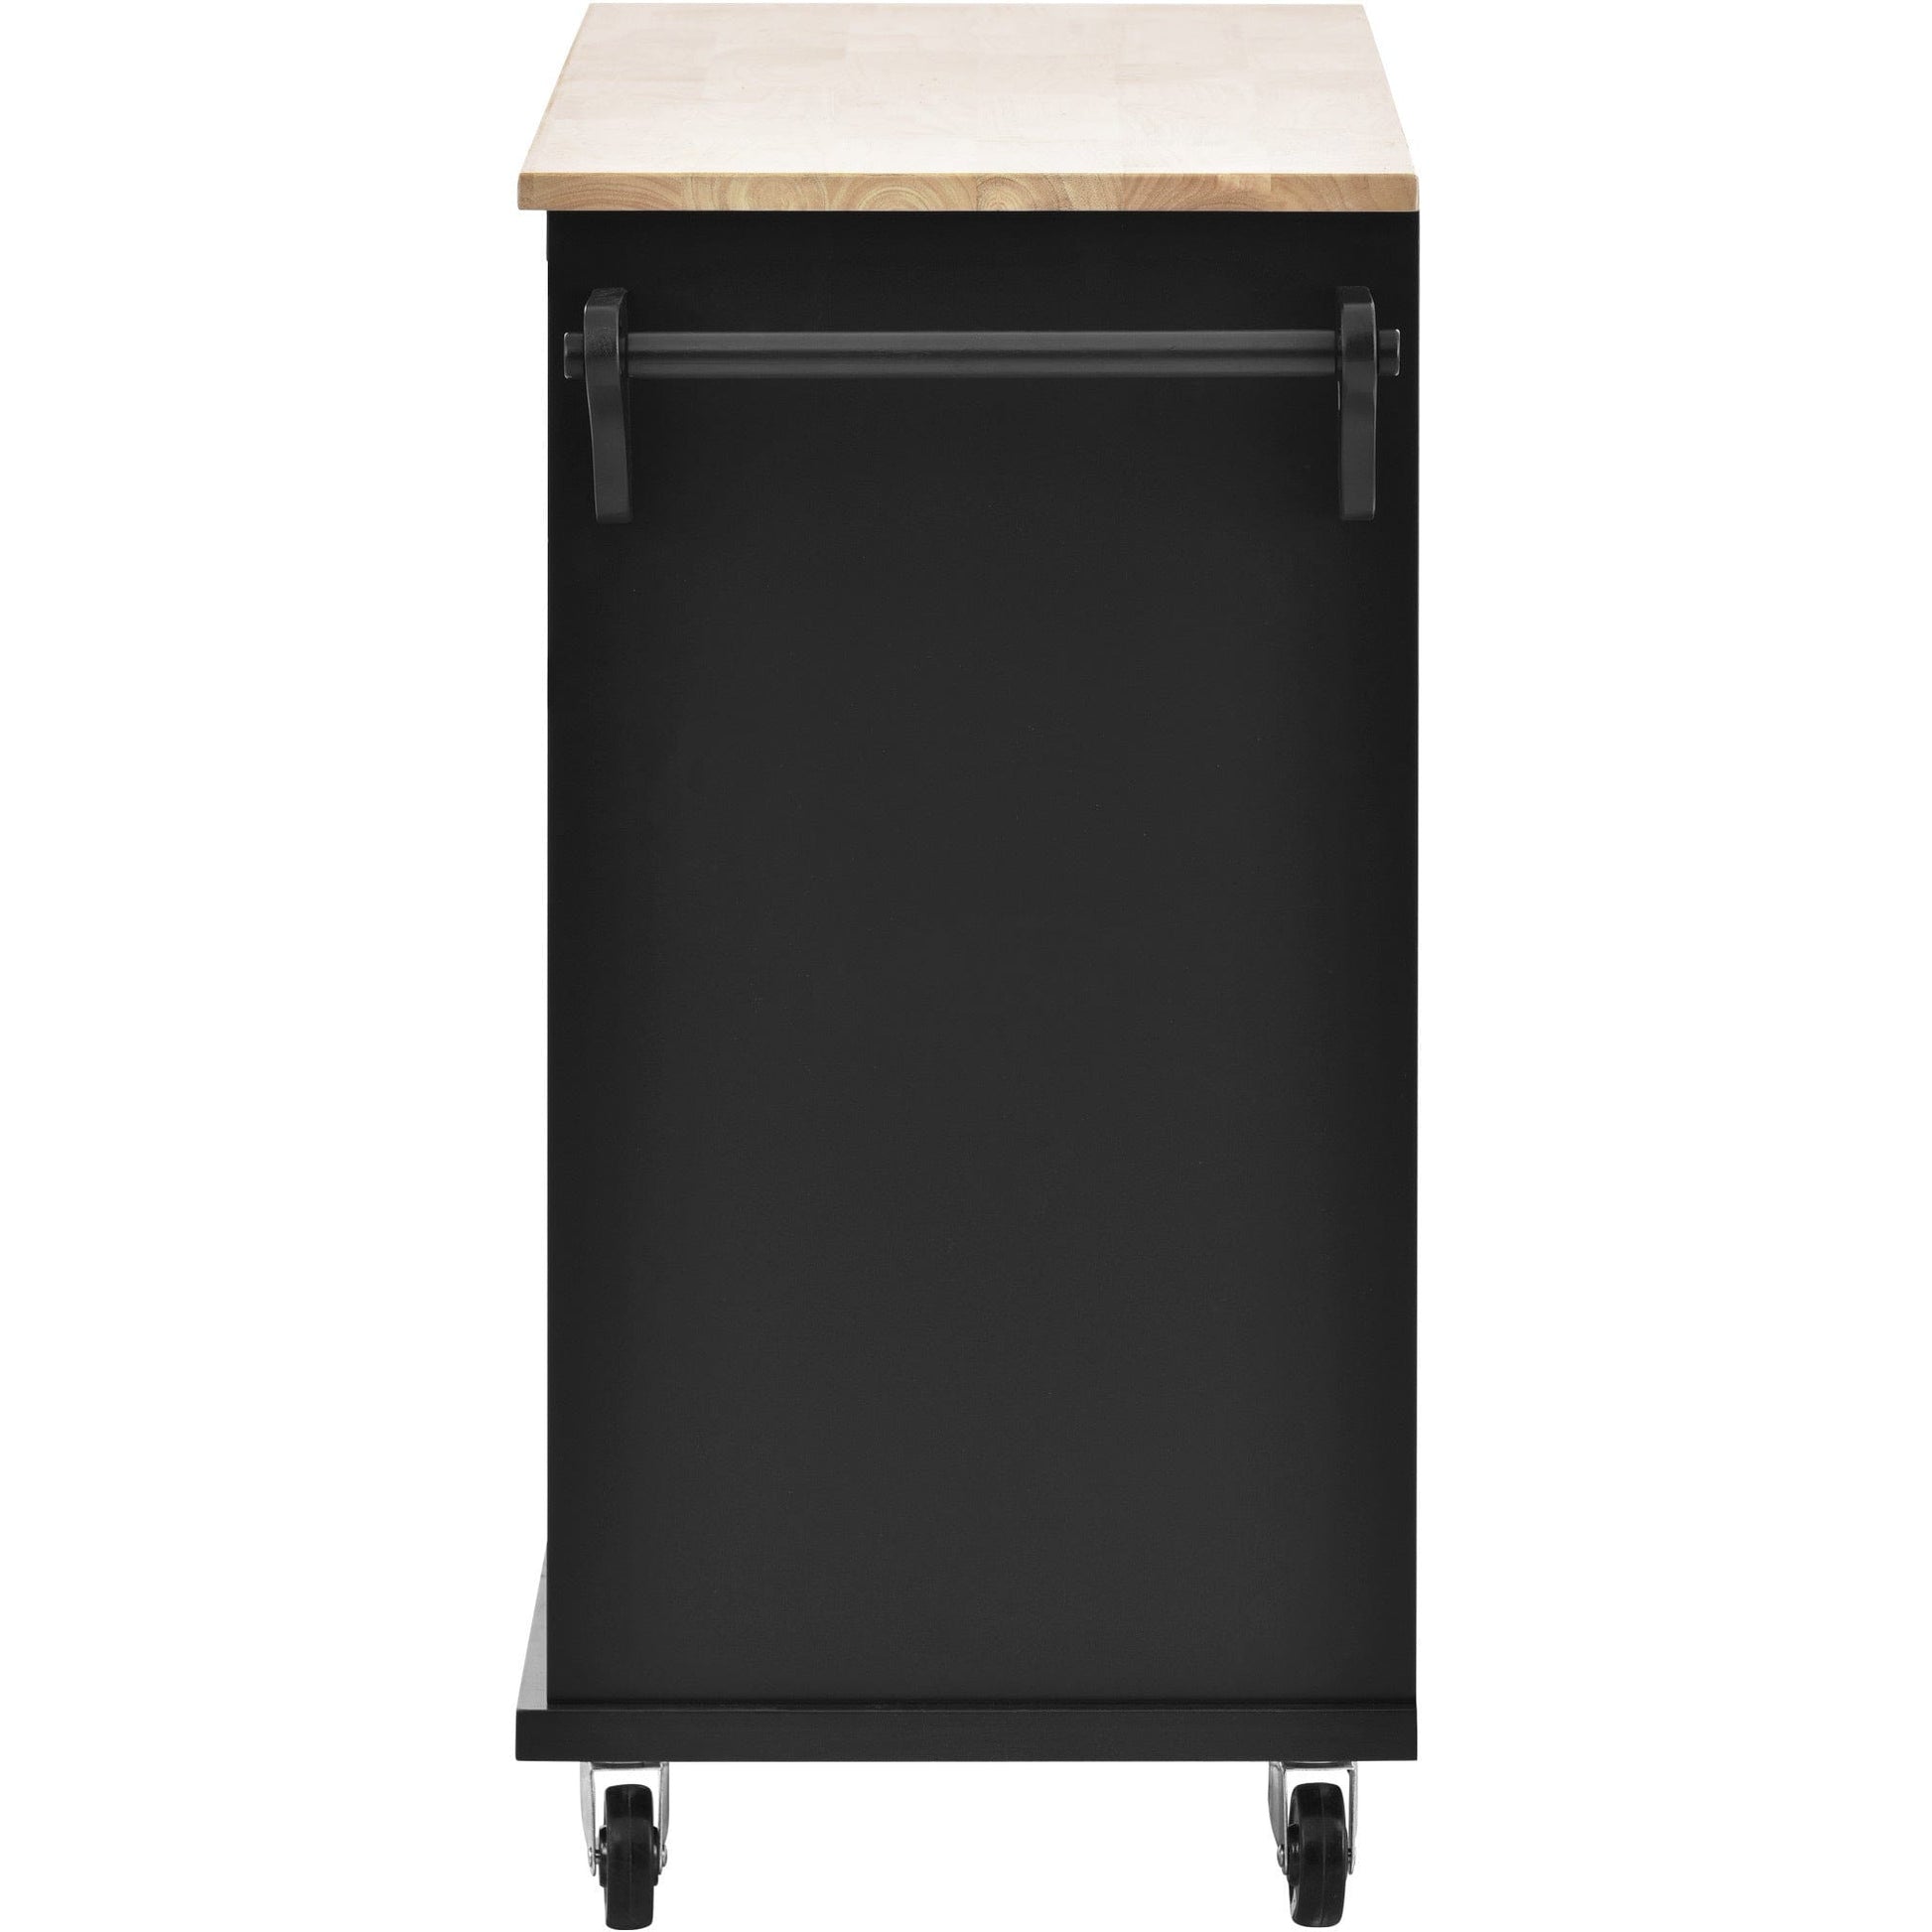 1st Choice Furniture Direct Kitchen Island Cart 1st Choice Versatile Kitchen Island Cart with Storage Cabinet & Drawers